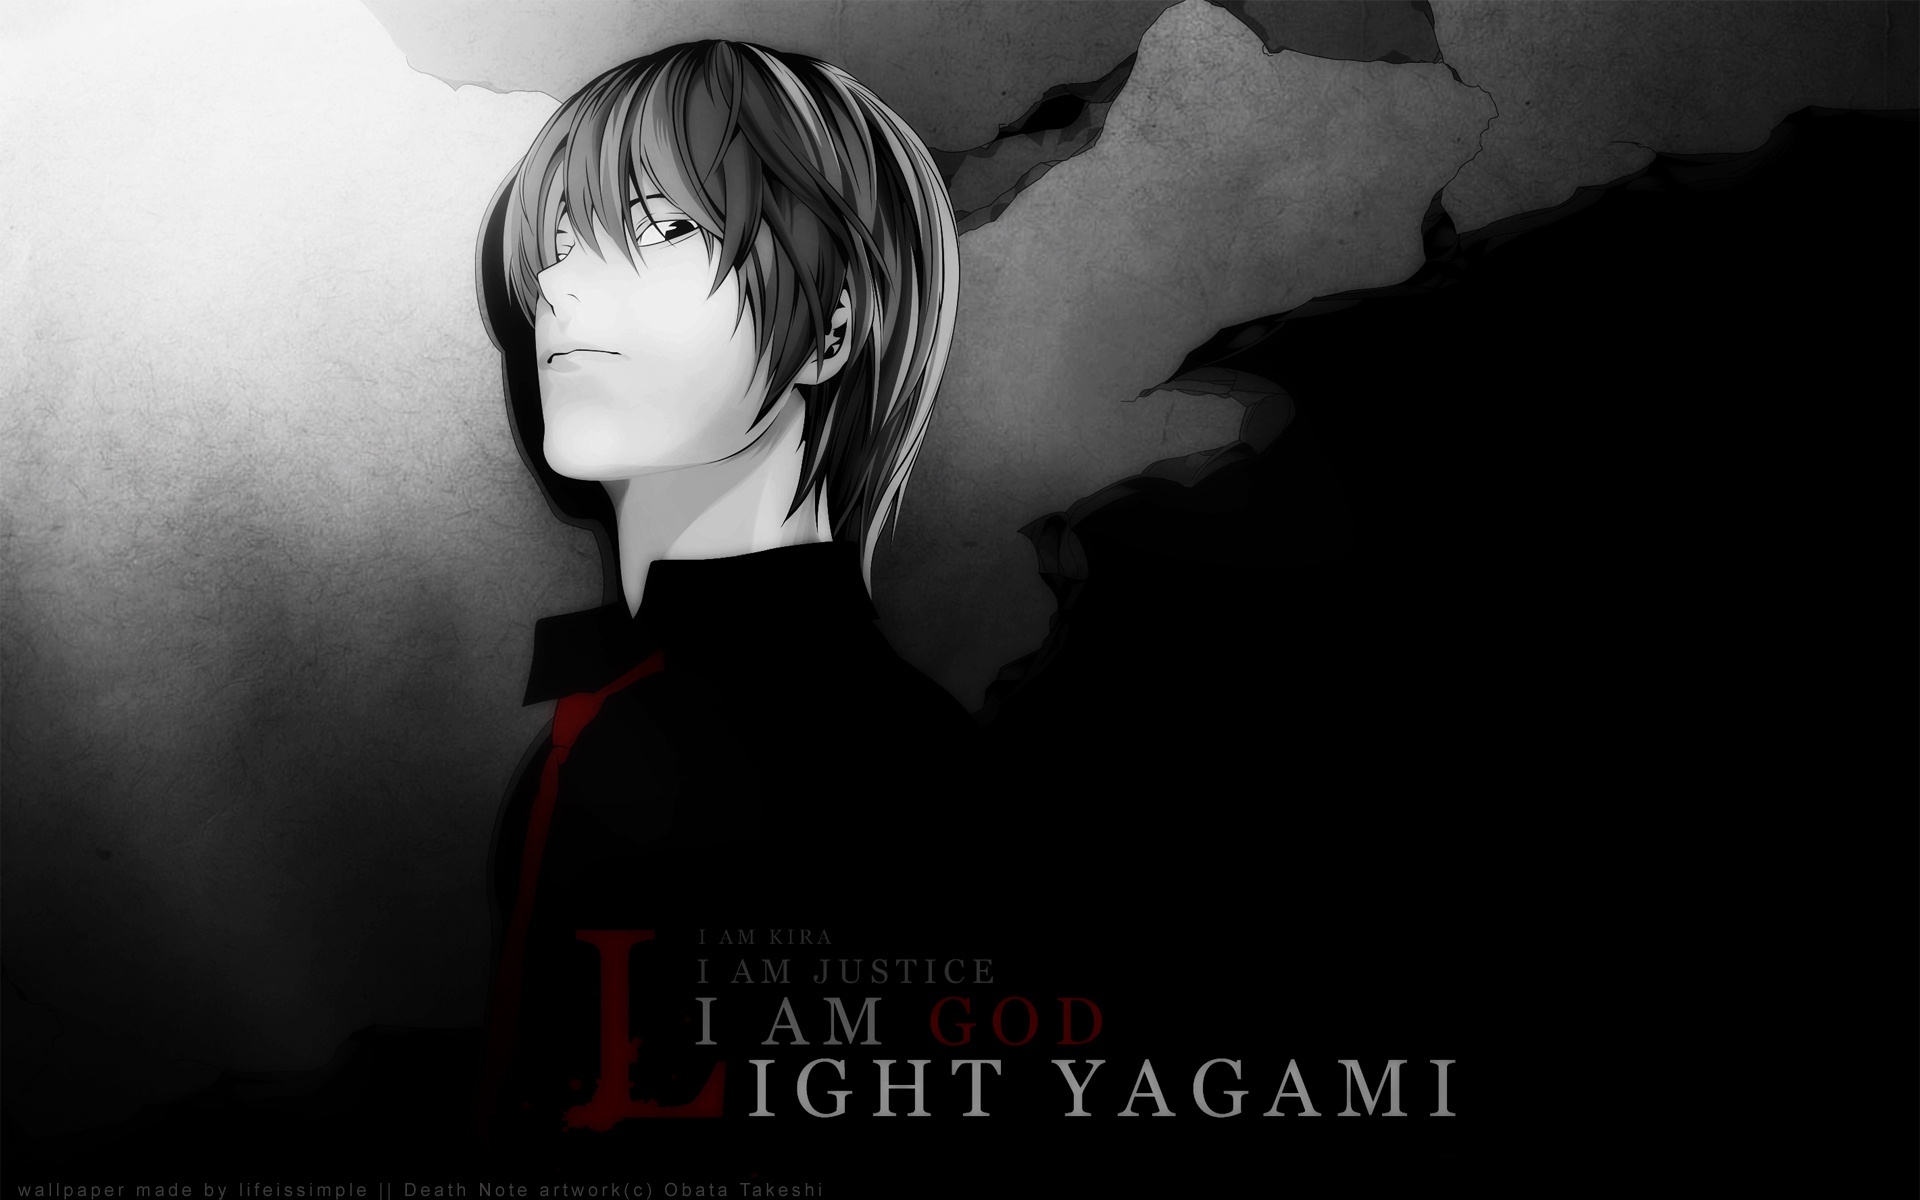 3d обои Кира из аниме Death note (I am Kira. I am justice. A am God. A am Light Yagami)  черно-белые # 88474